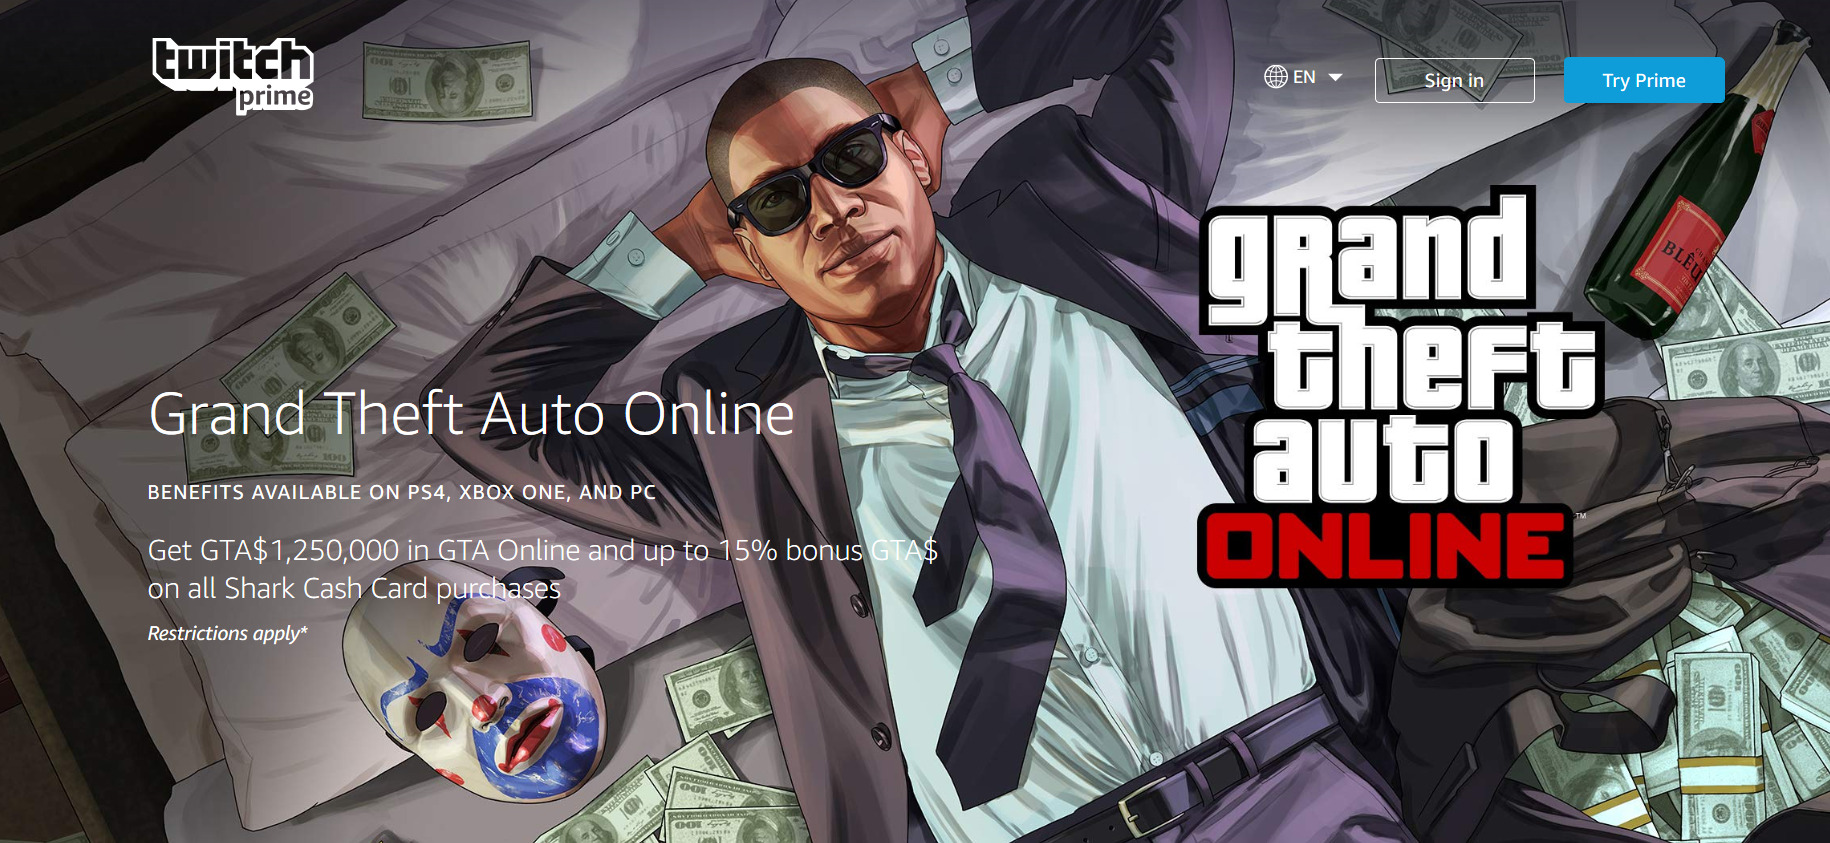 Screenshot 2019 07 03 Twitch Prime Grand Theft Auto Online